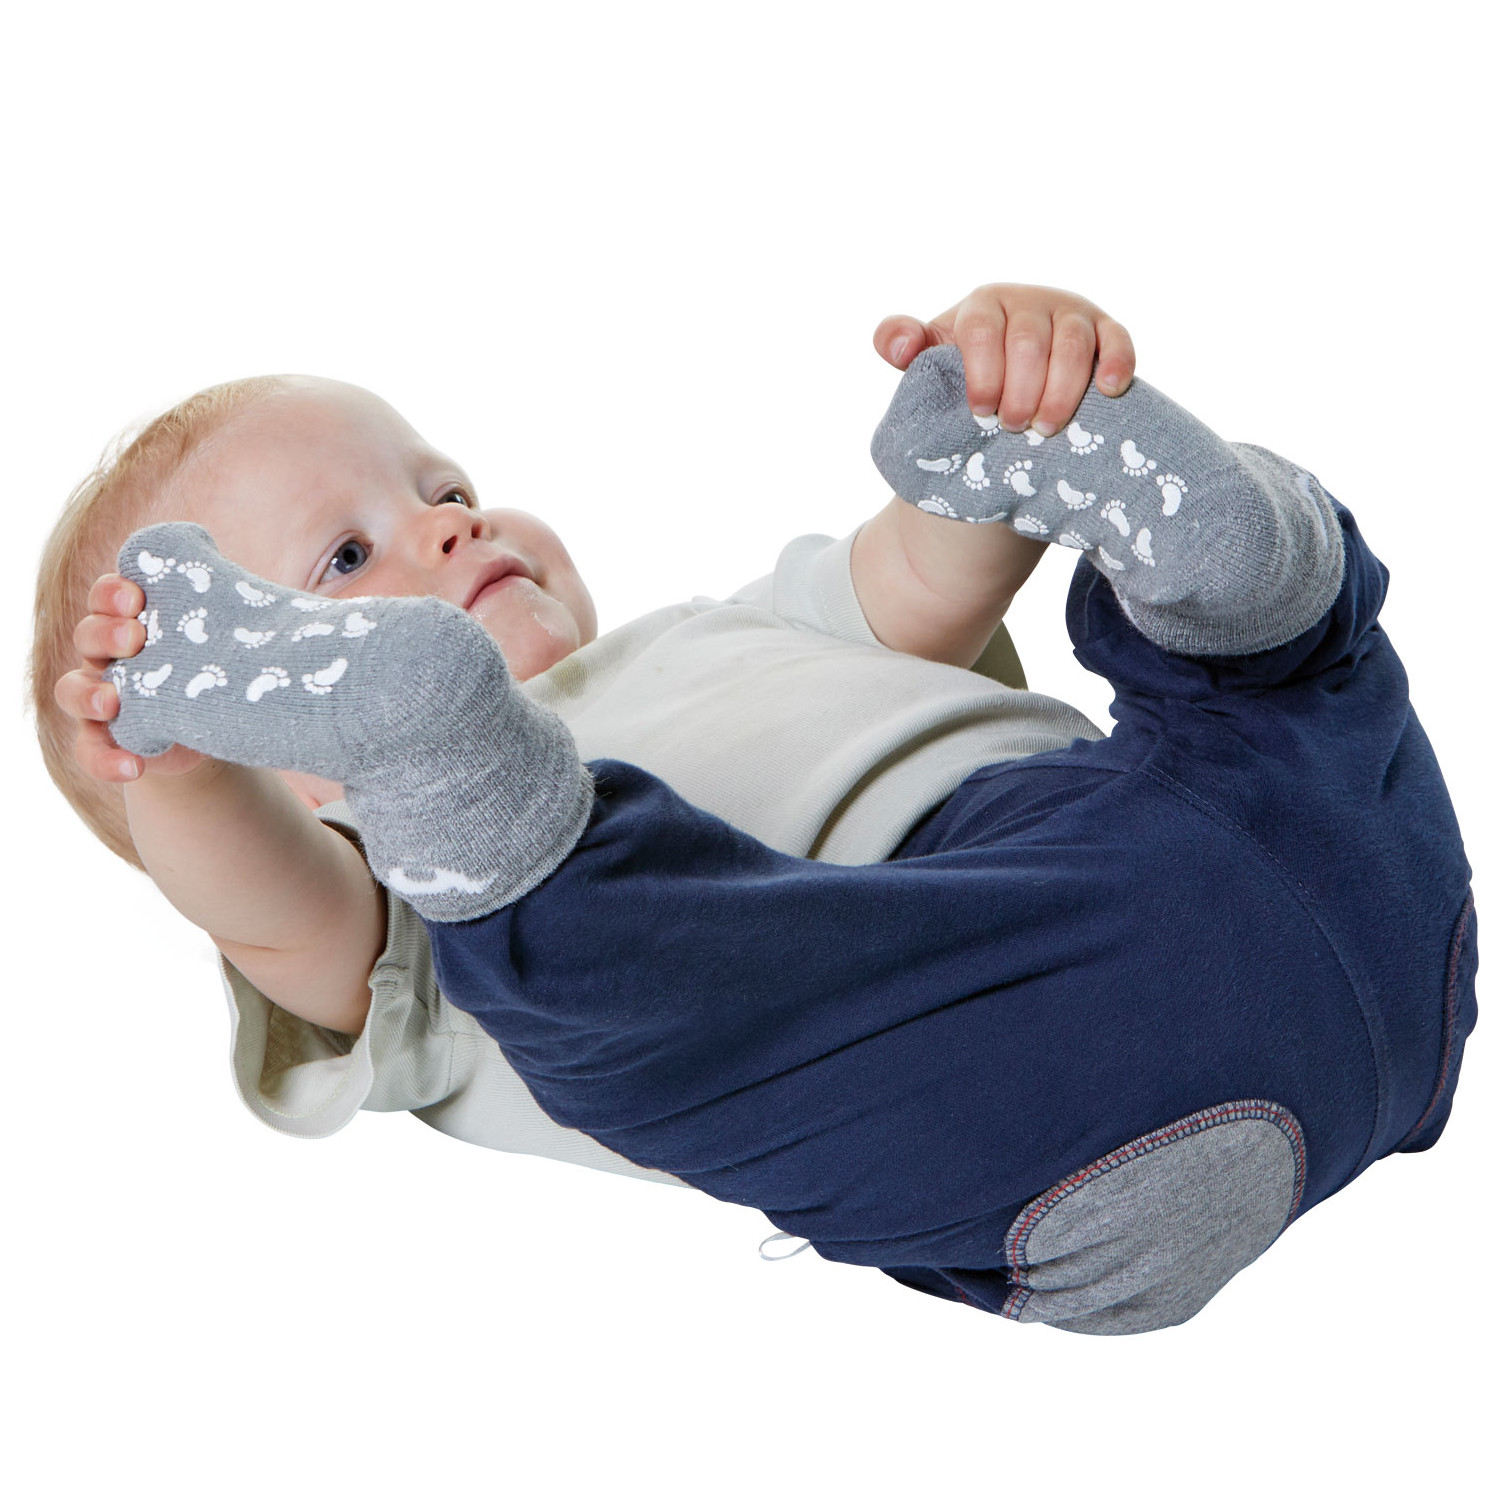 Calze Antiscivolo in Baby Alpaka per bambini_70485